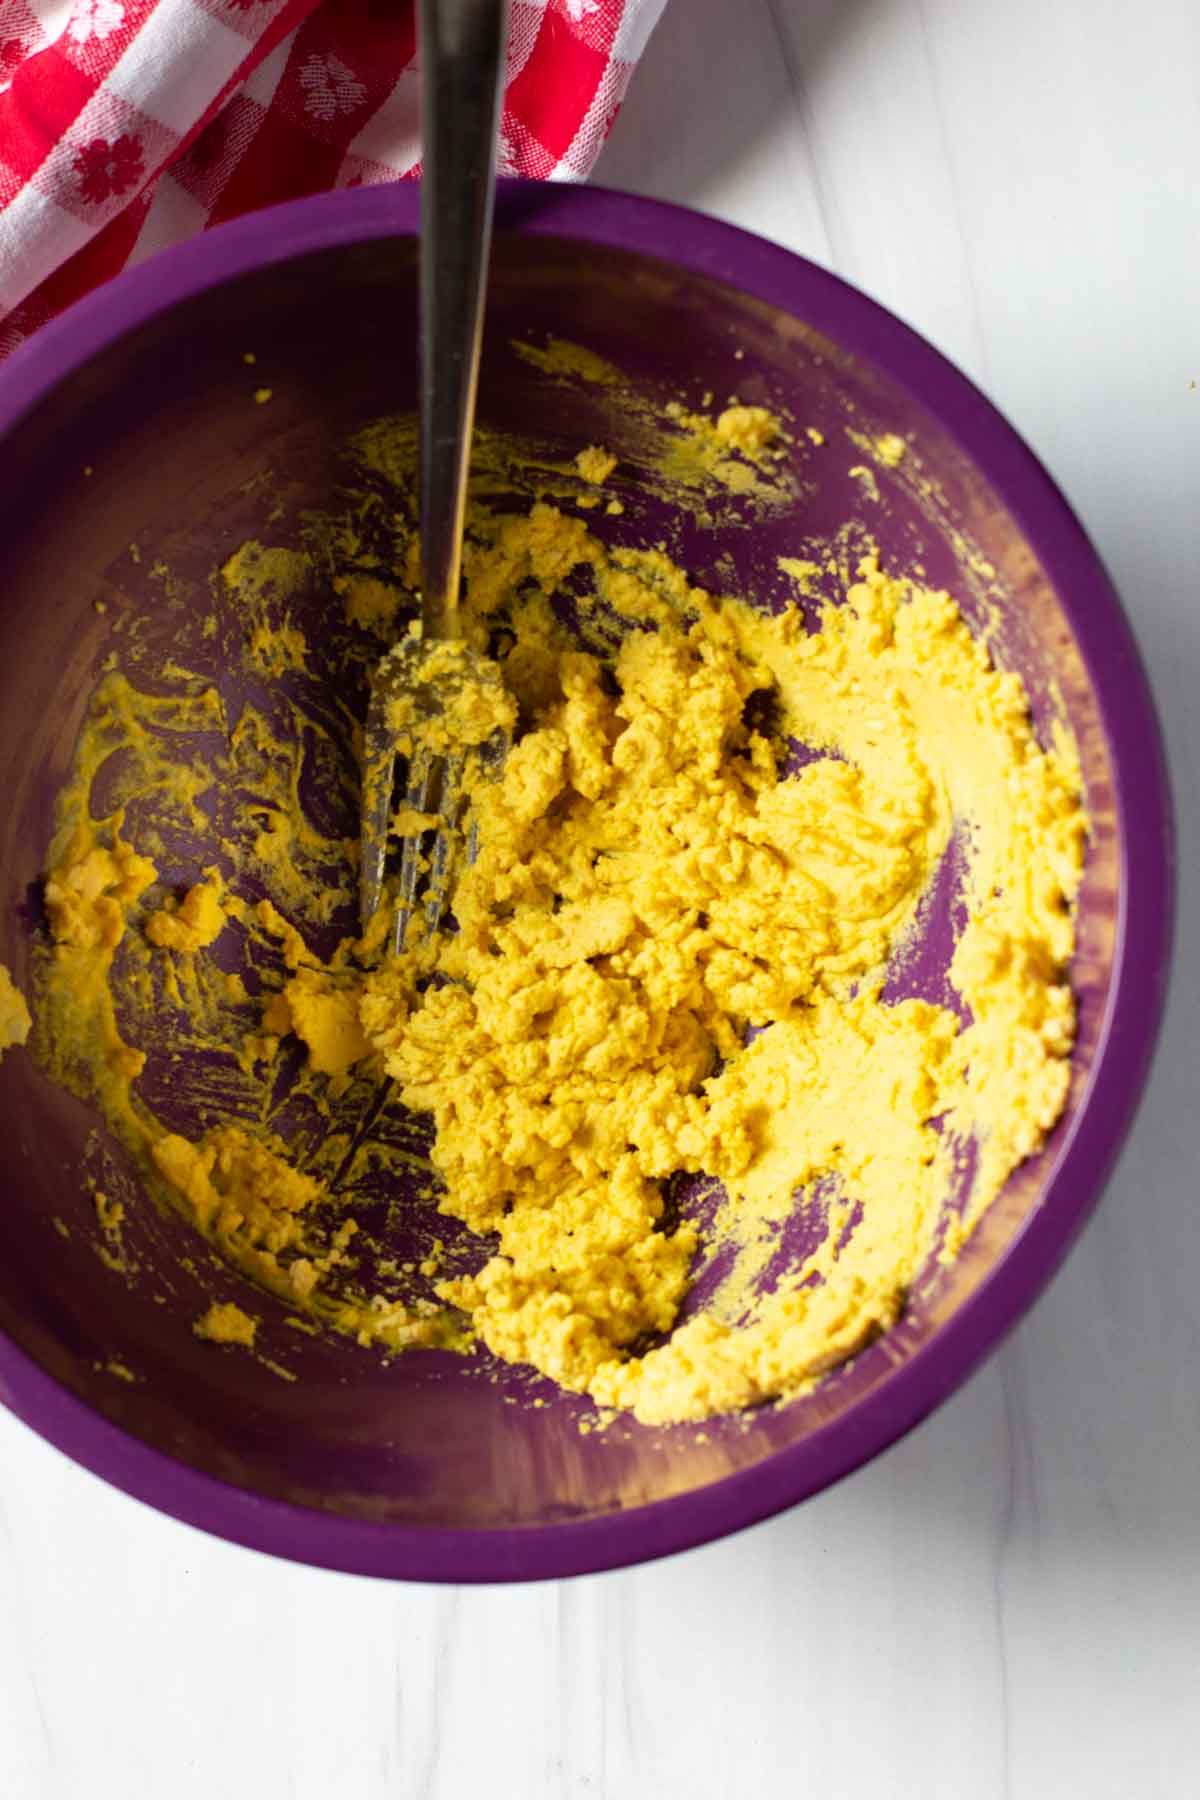 Combing mustard and egg yolk to make dressing for Amish macaroni salad.